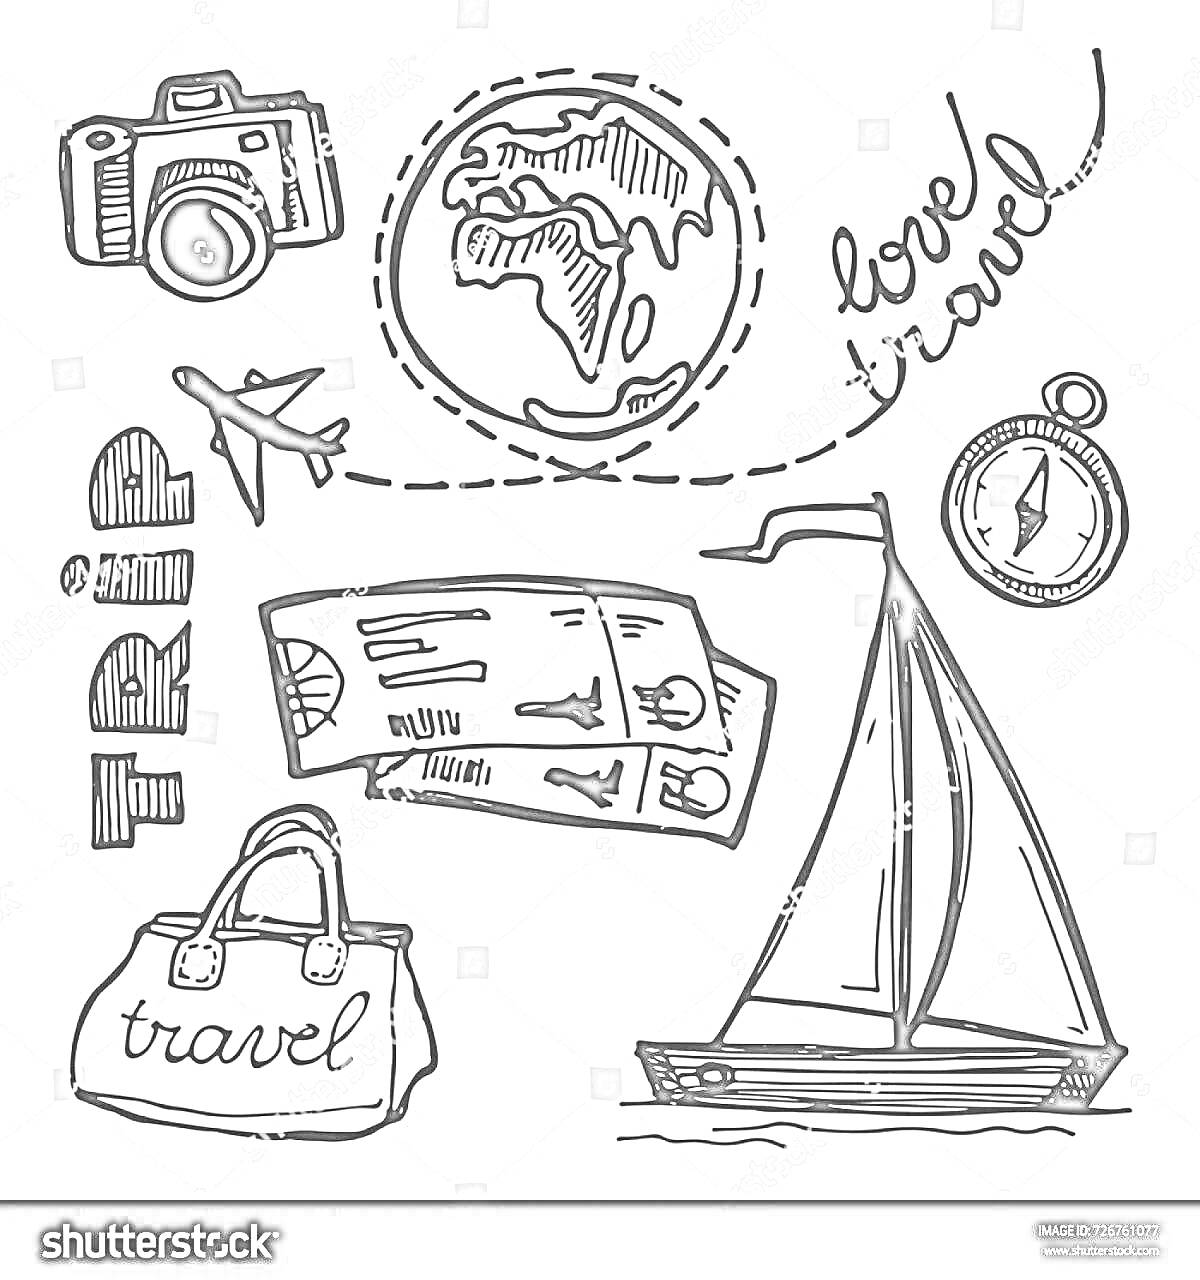 Камера, глобус, самолёт, компас, билеты, парусник, дорожная сумка с надписью 